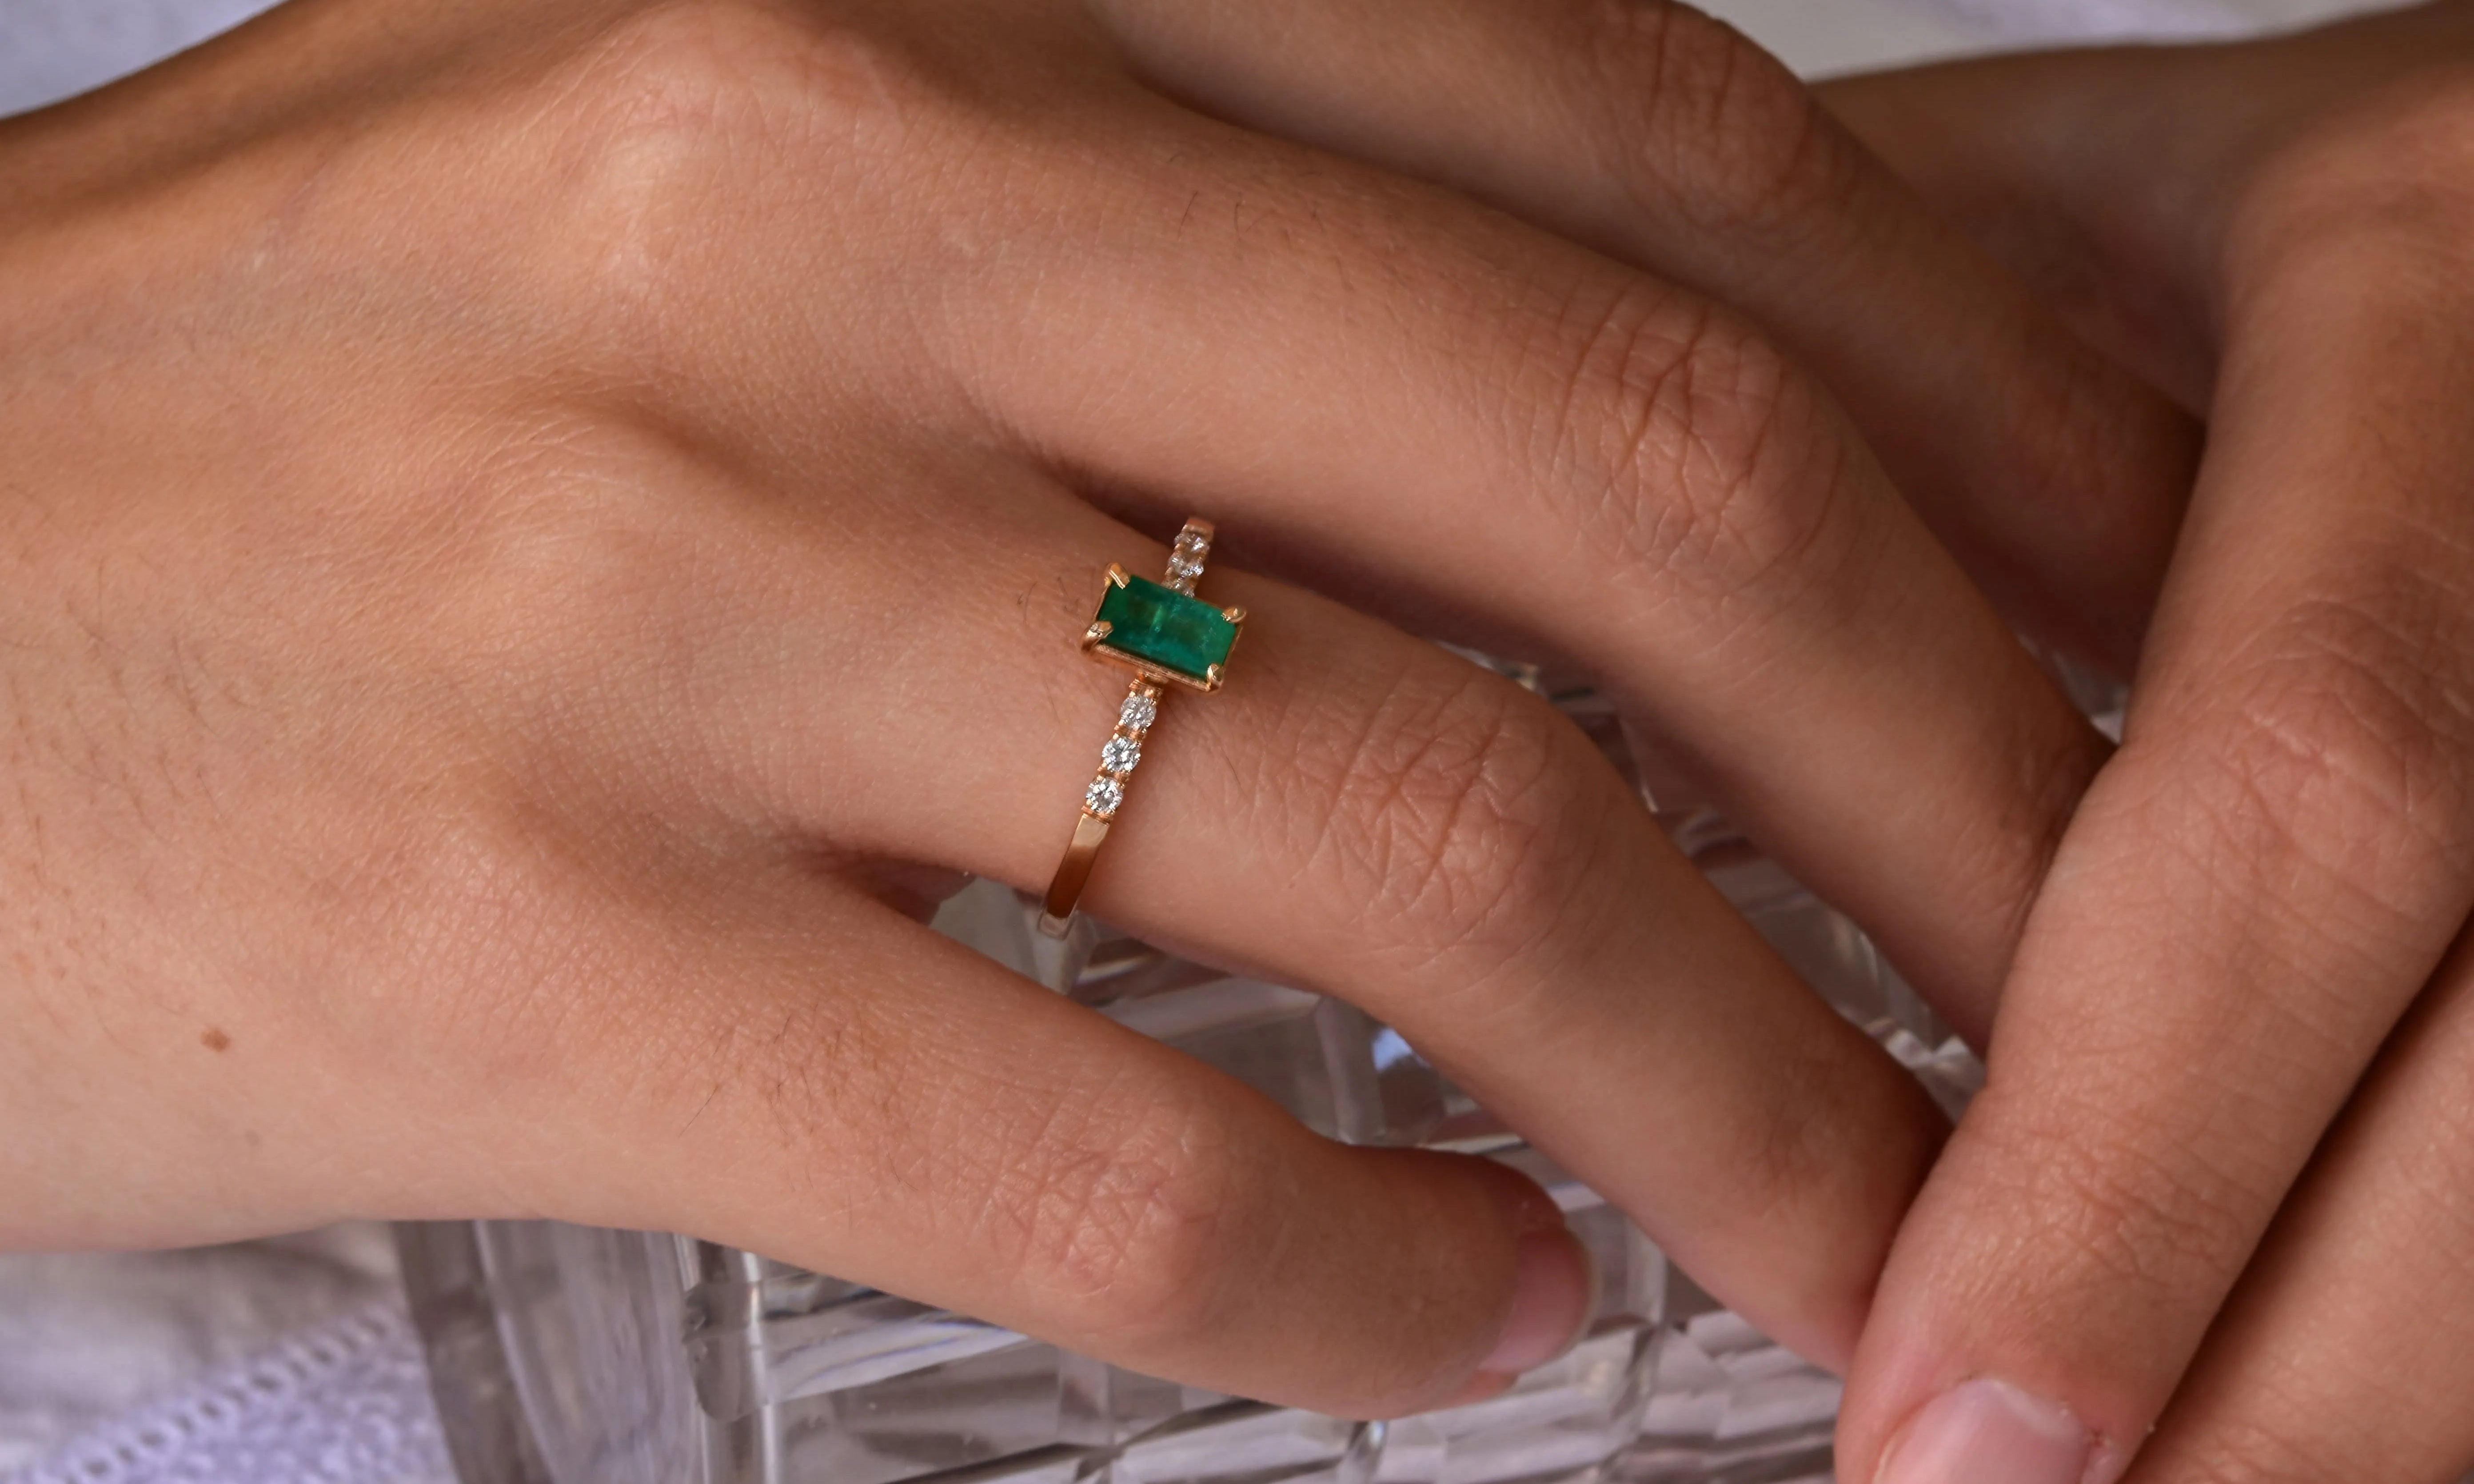 engagement ring emerald